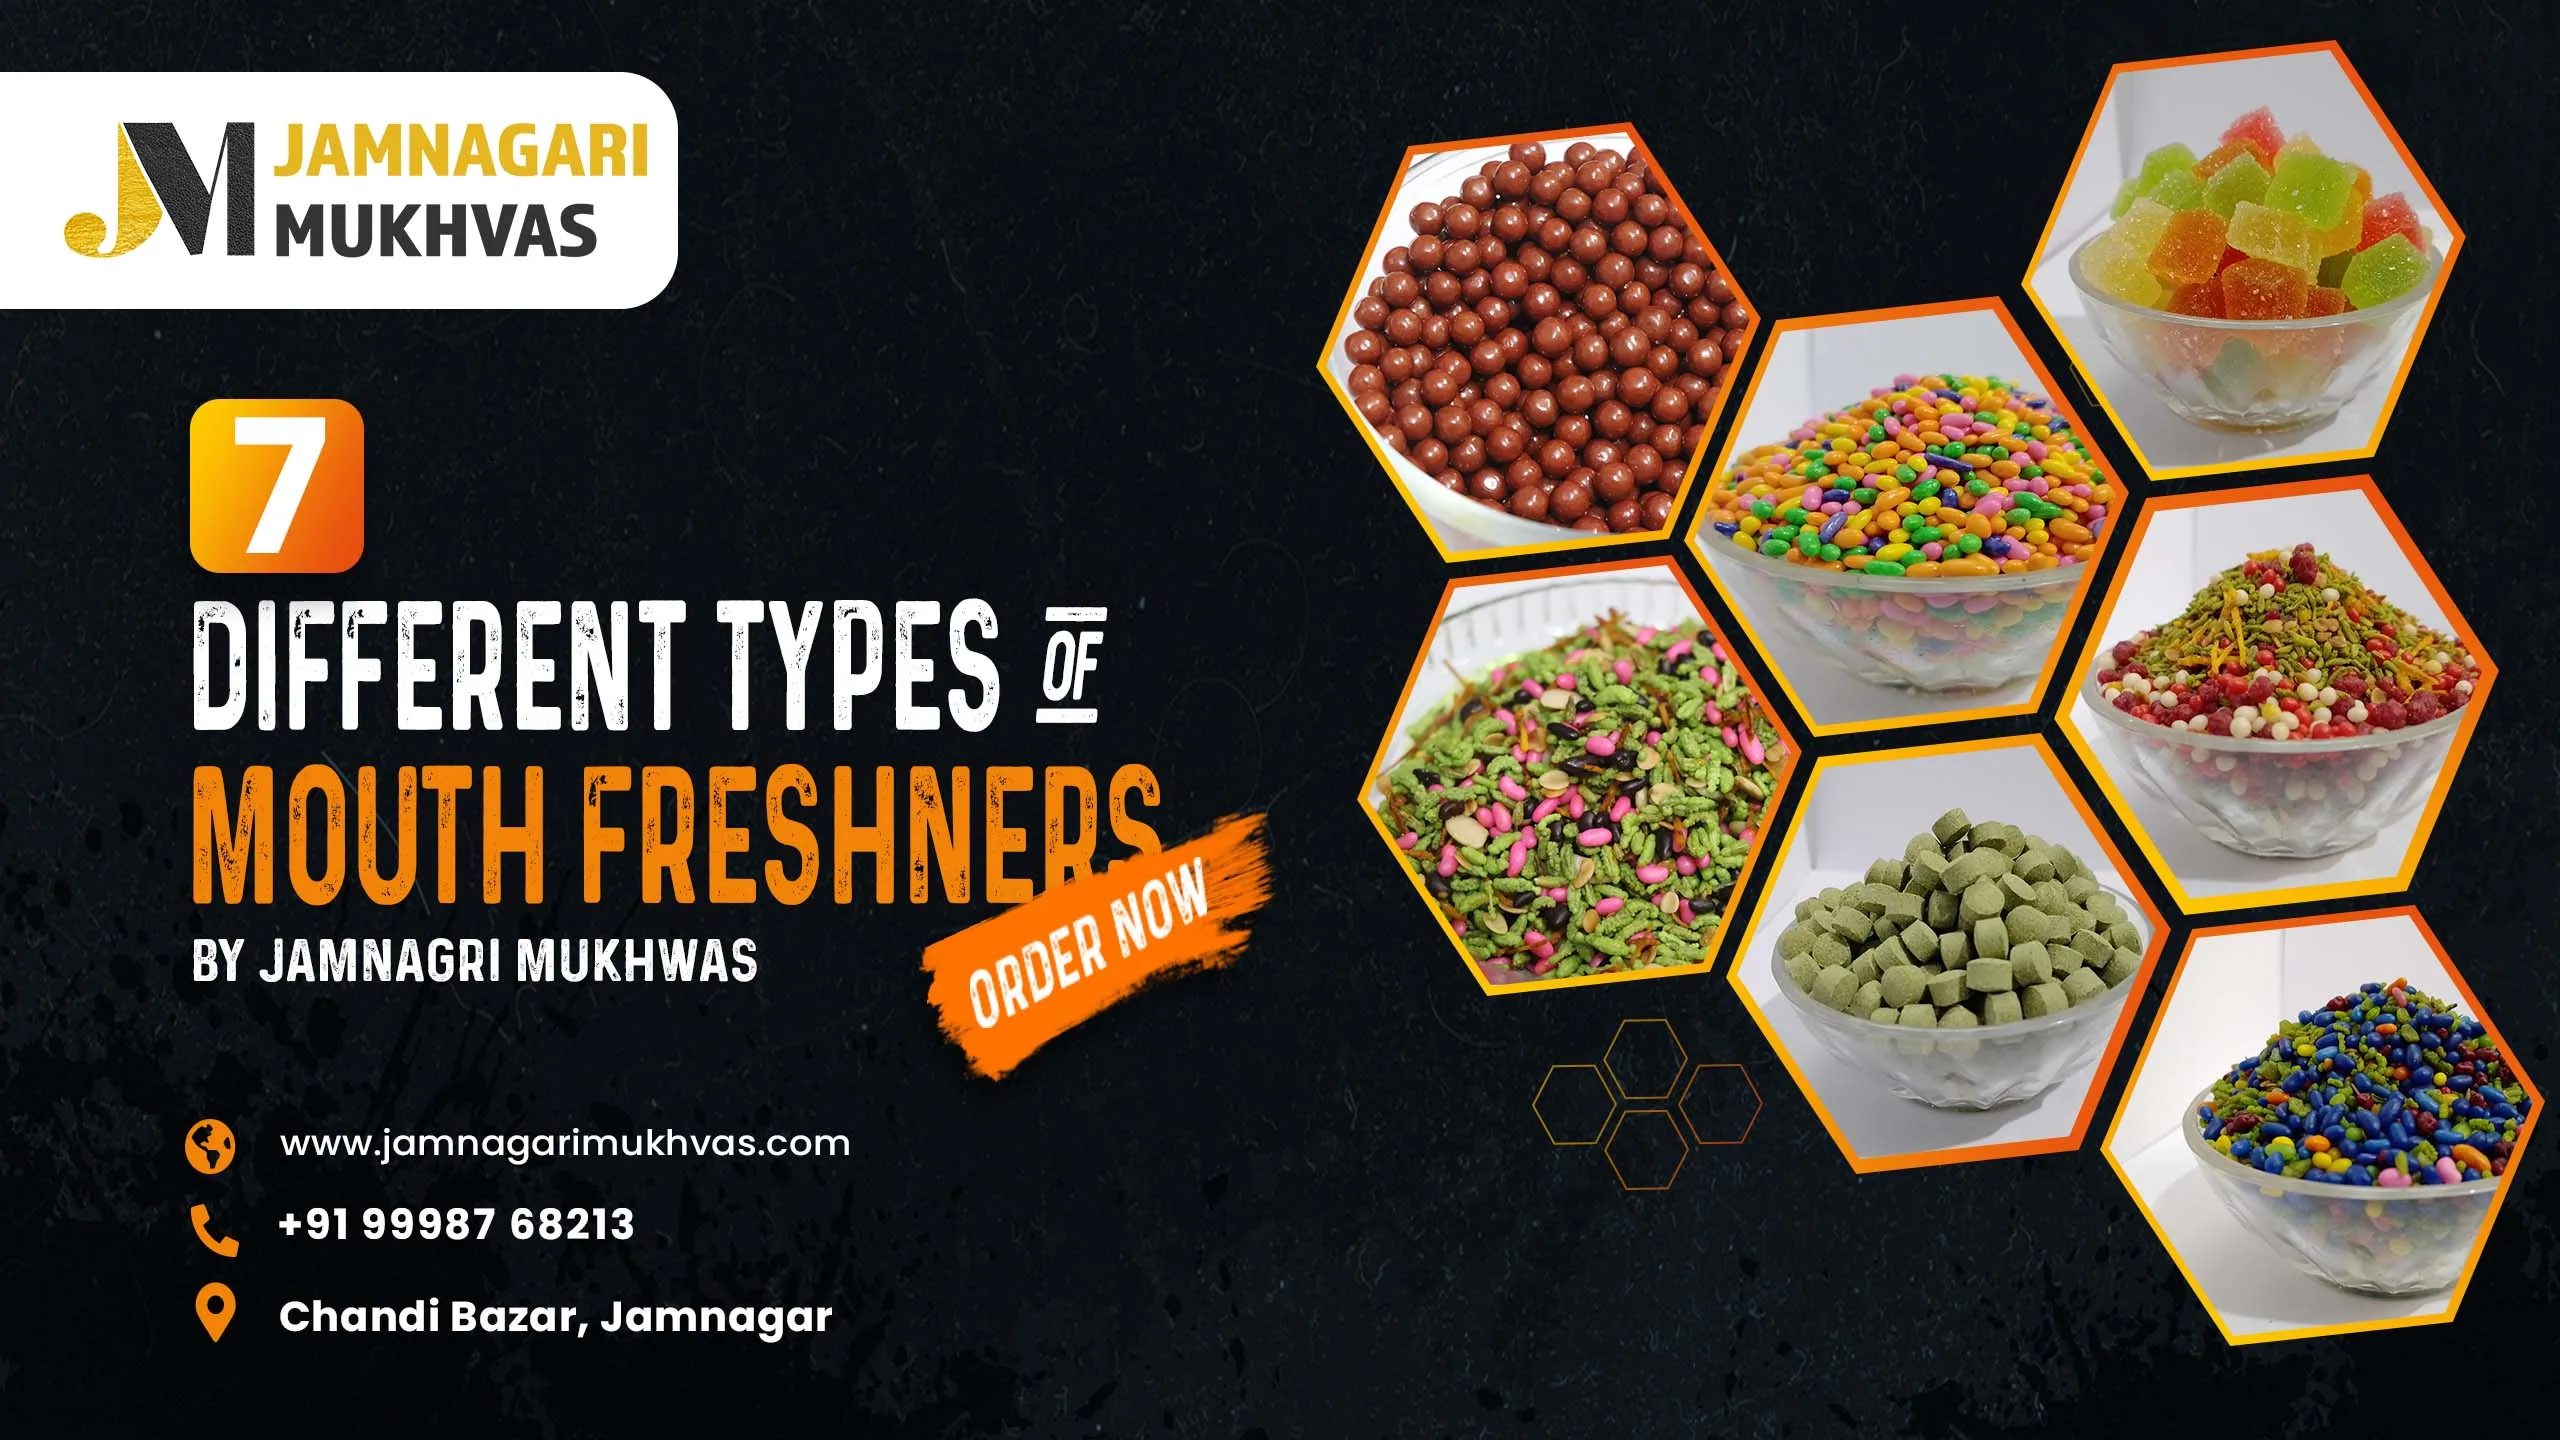 7 Different Types of Mouth Fresheners by Jamnagari Mukhvas